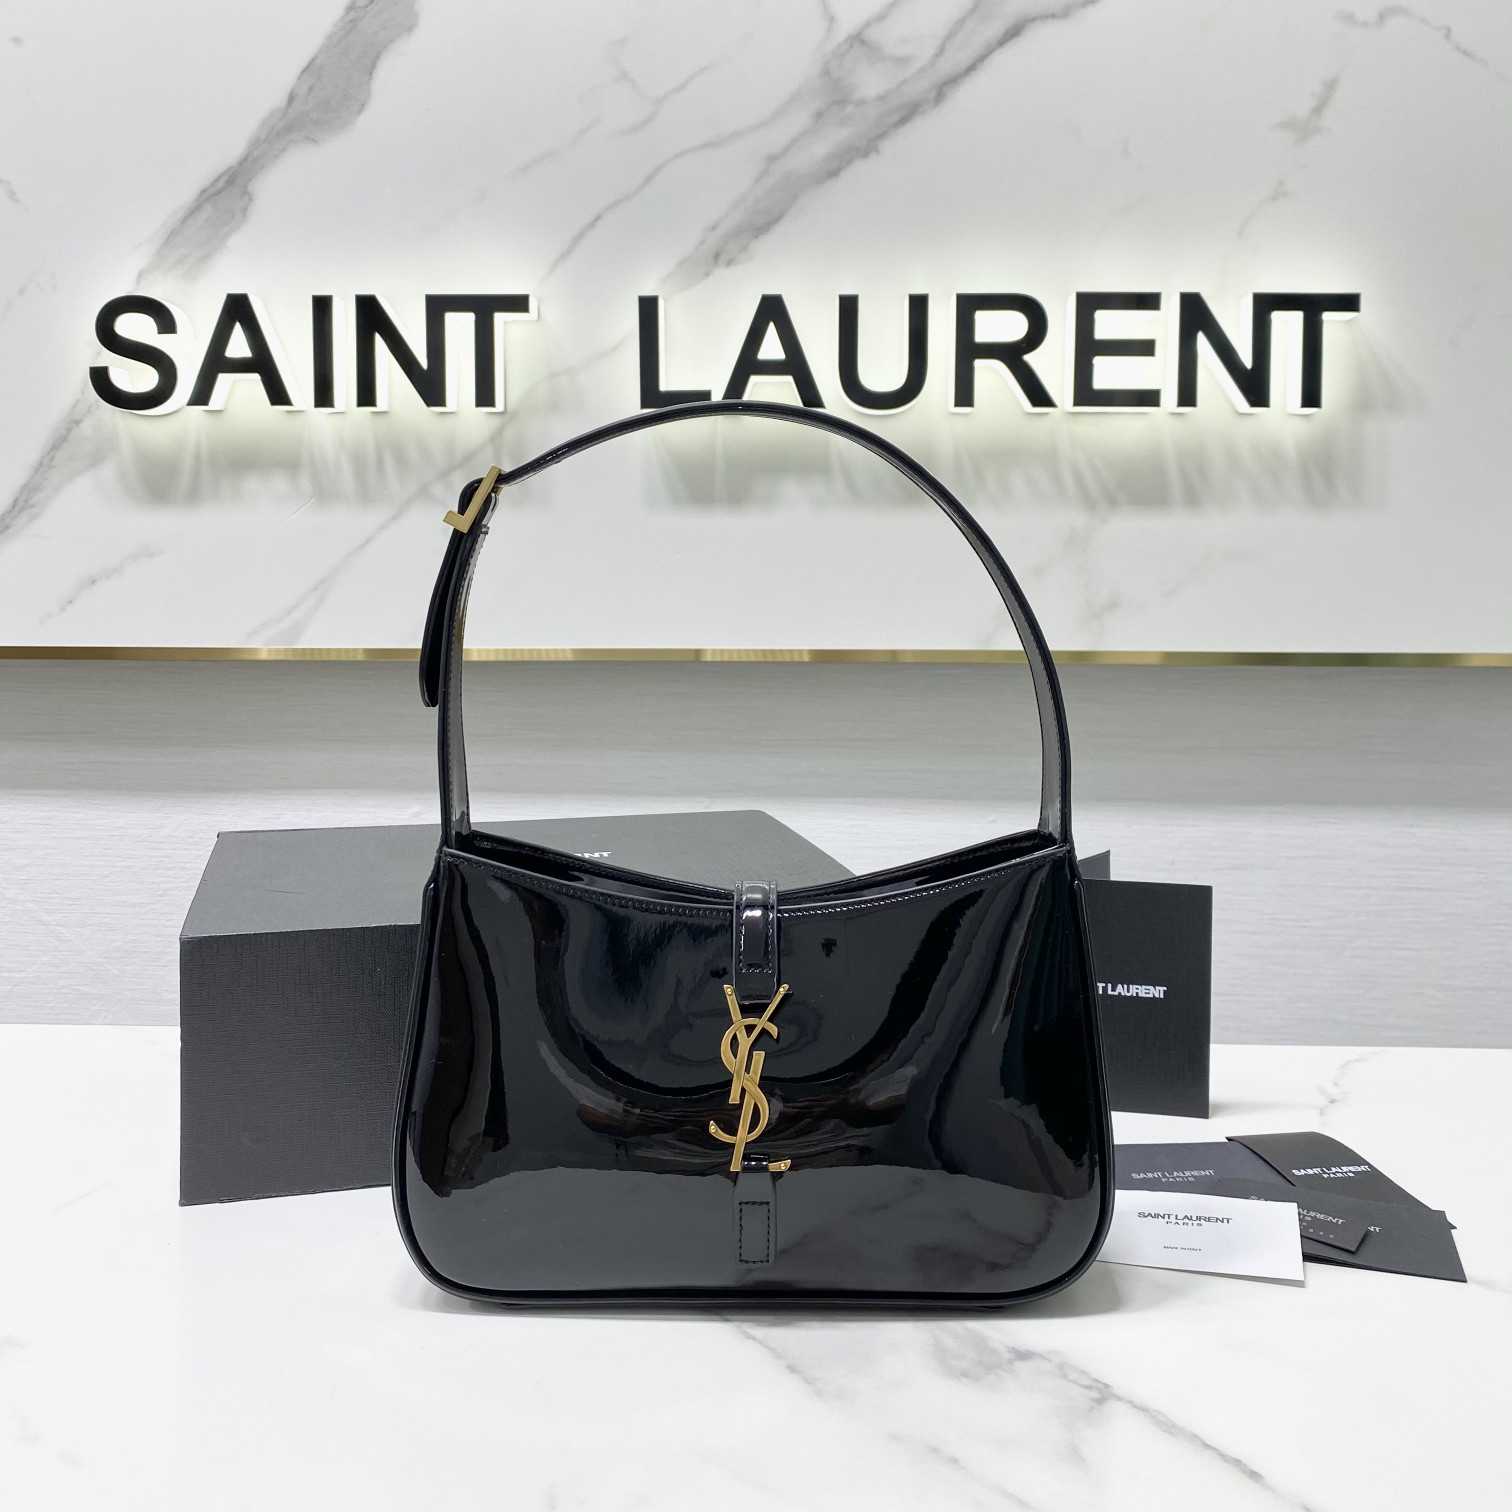 Saint Laurent Le 5 À 7 In Patent Leather - DesignerGu